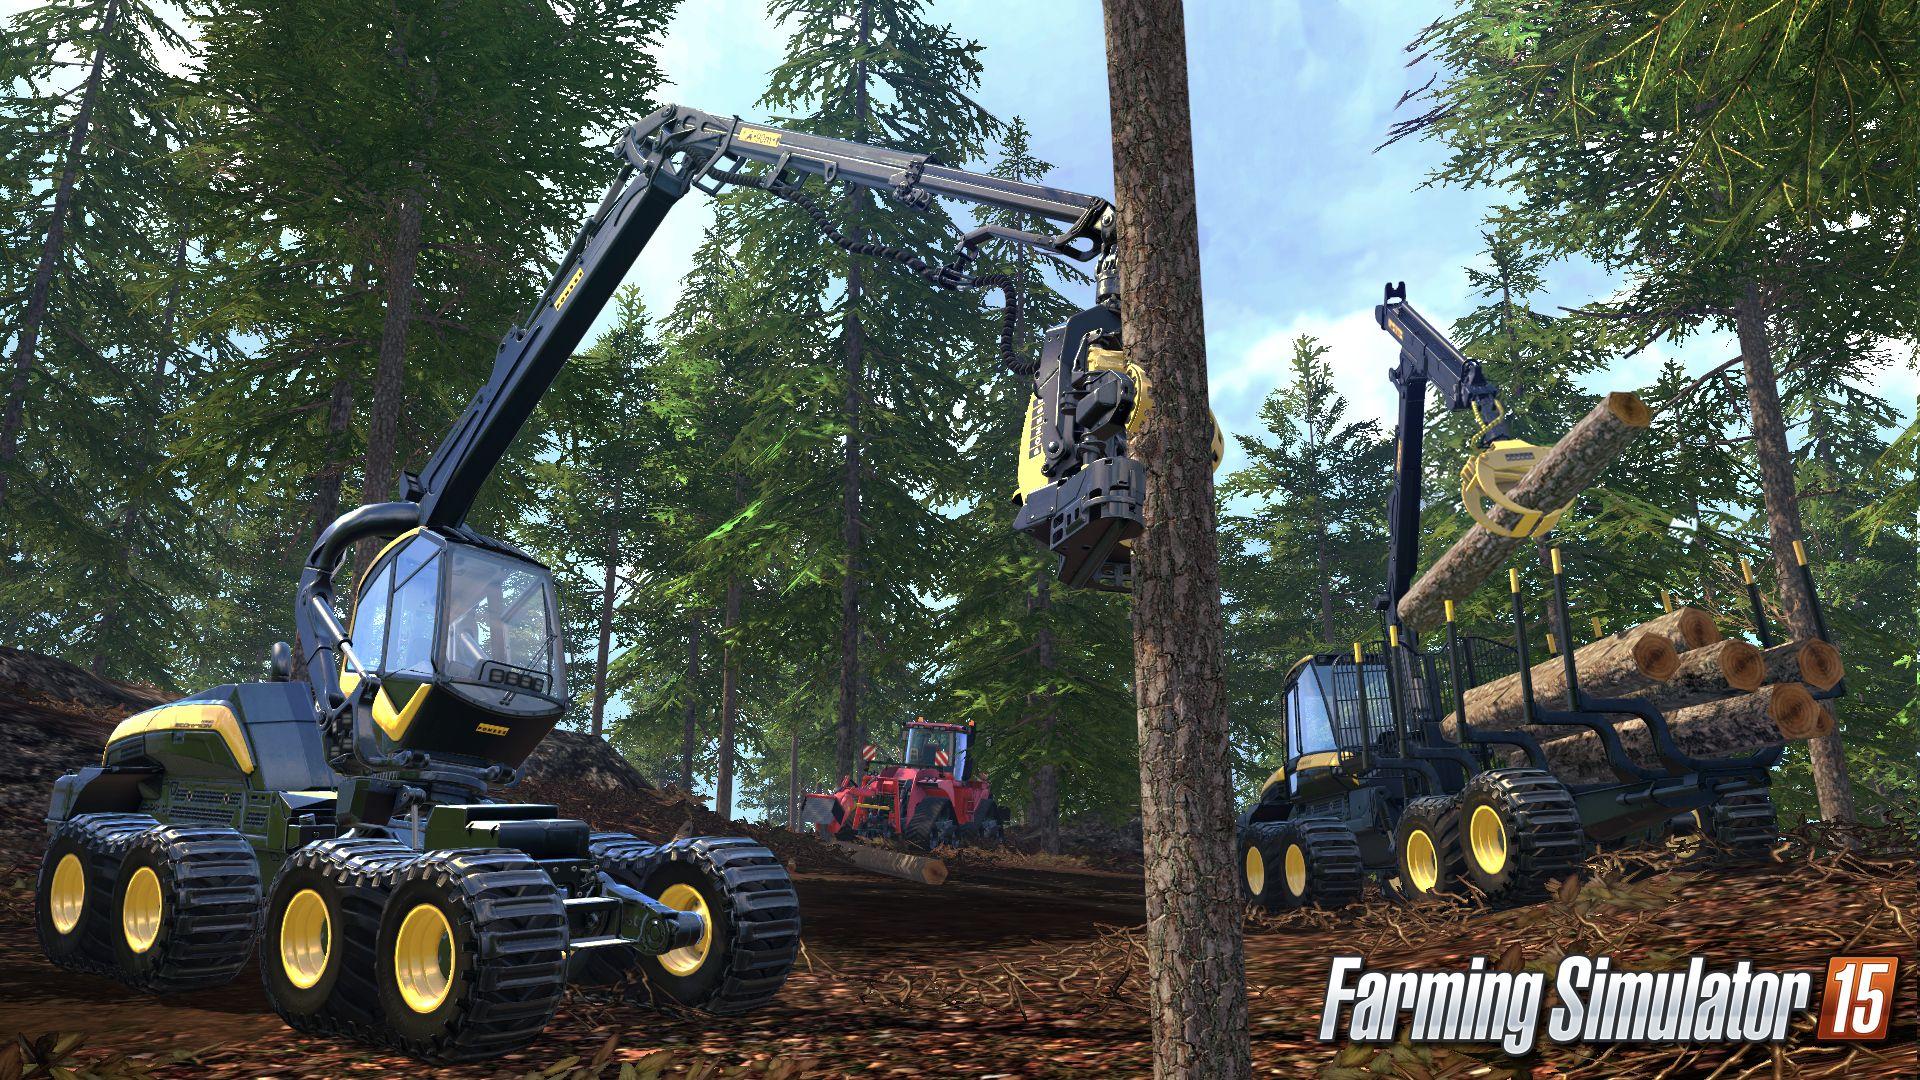 Xbox One, PS4 Getting Farming Simulator